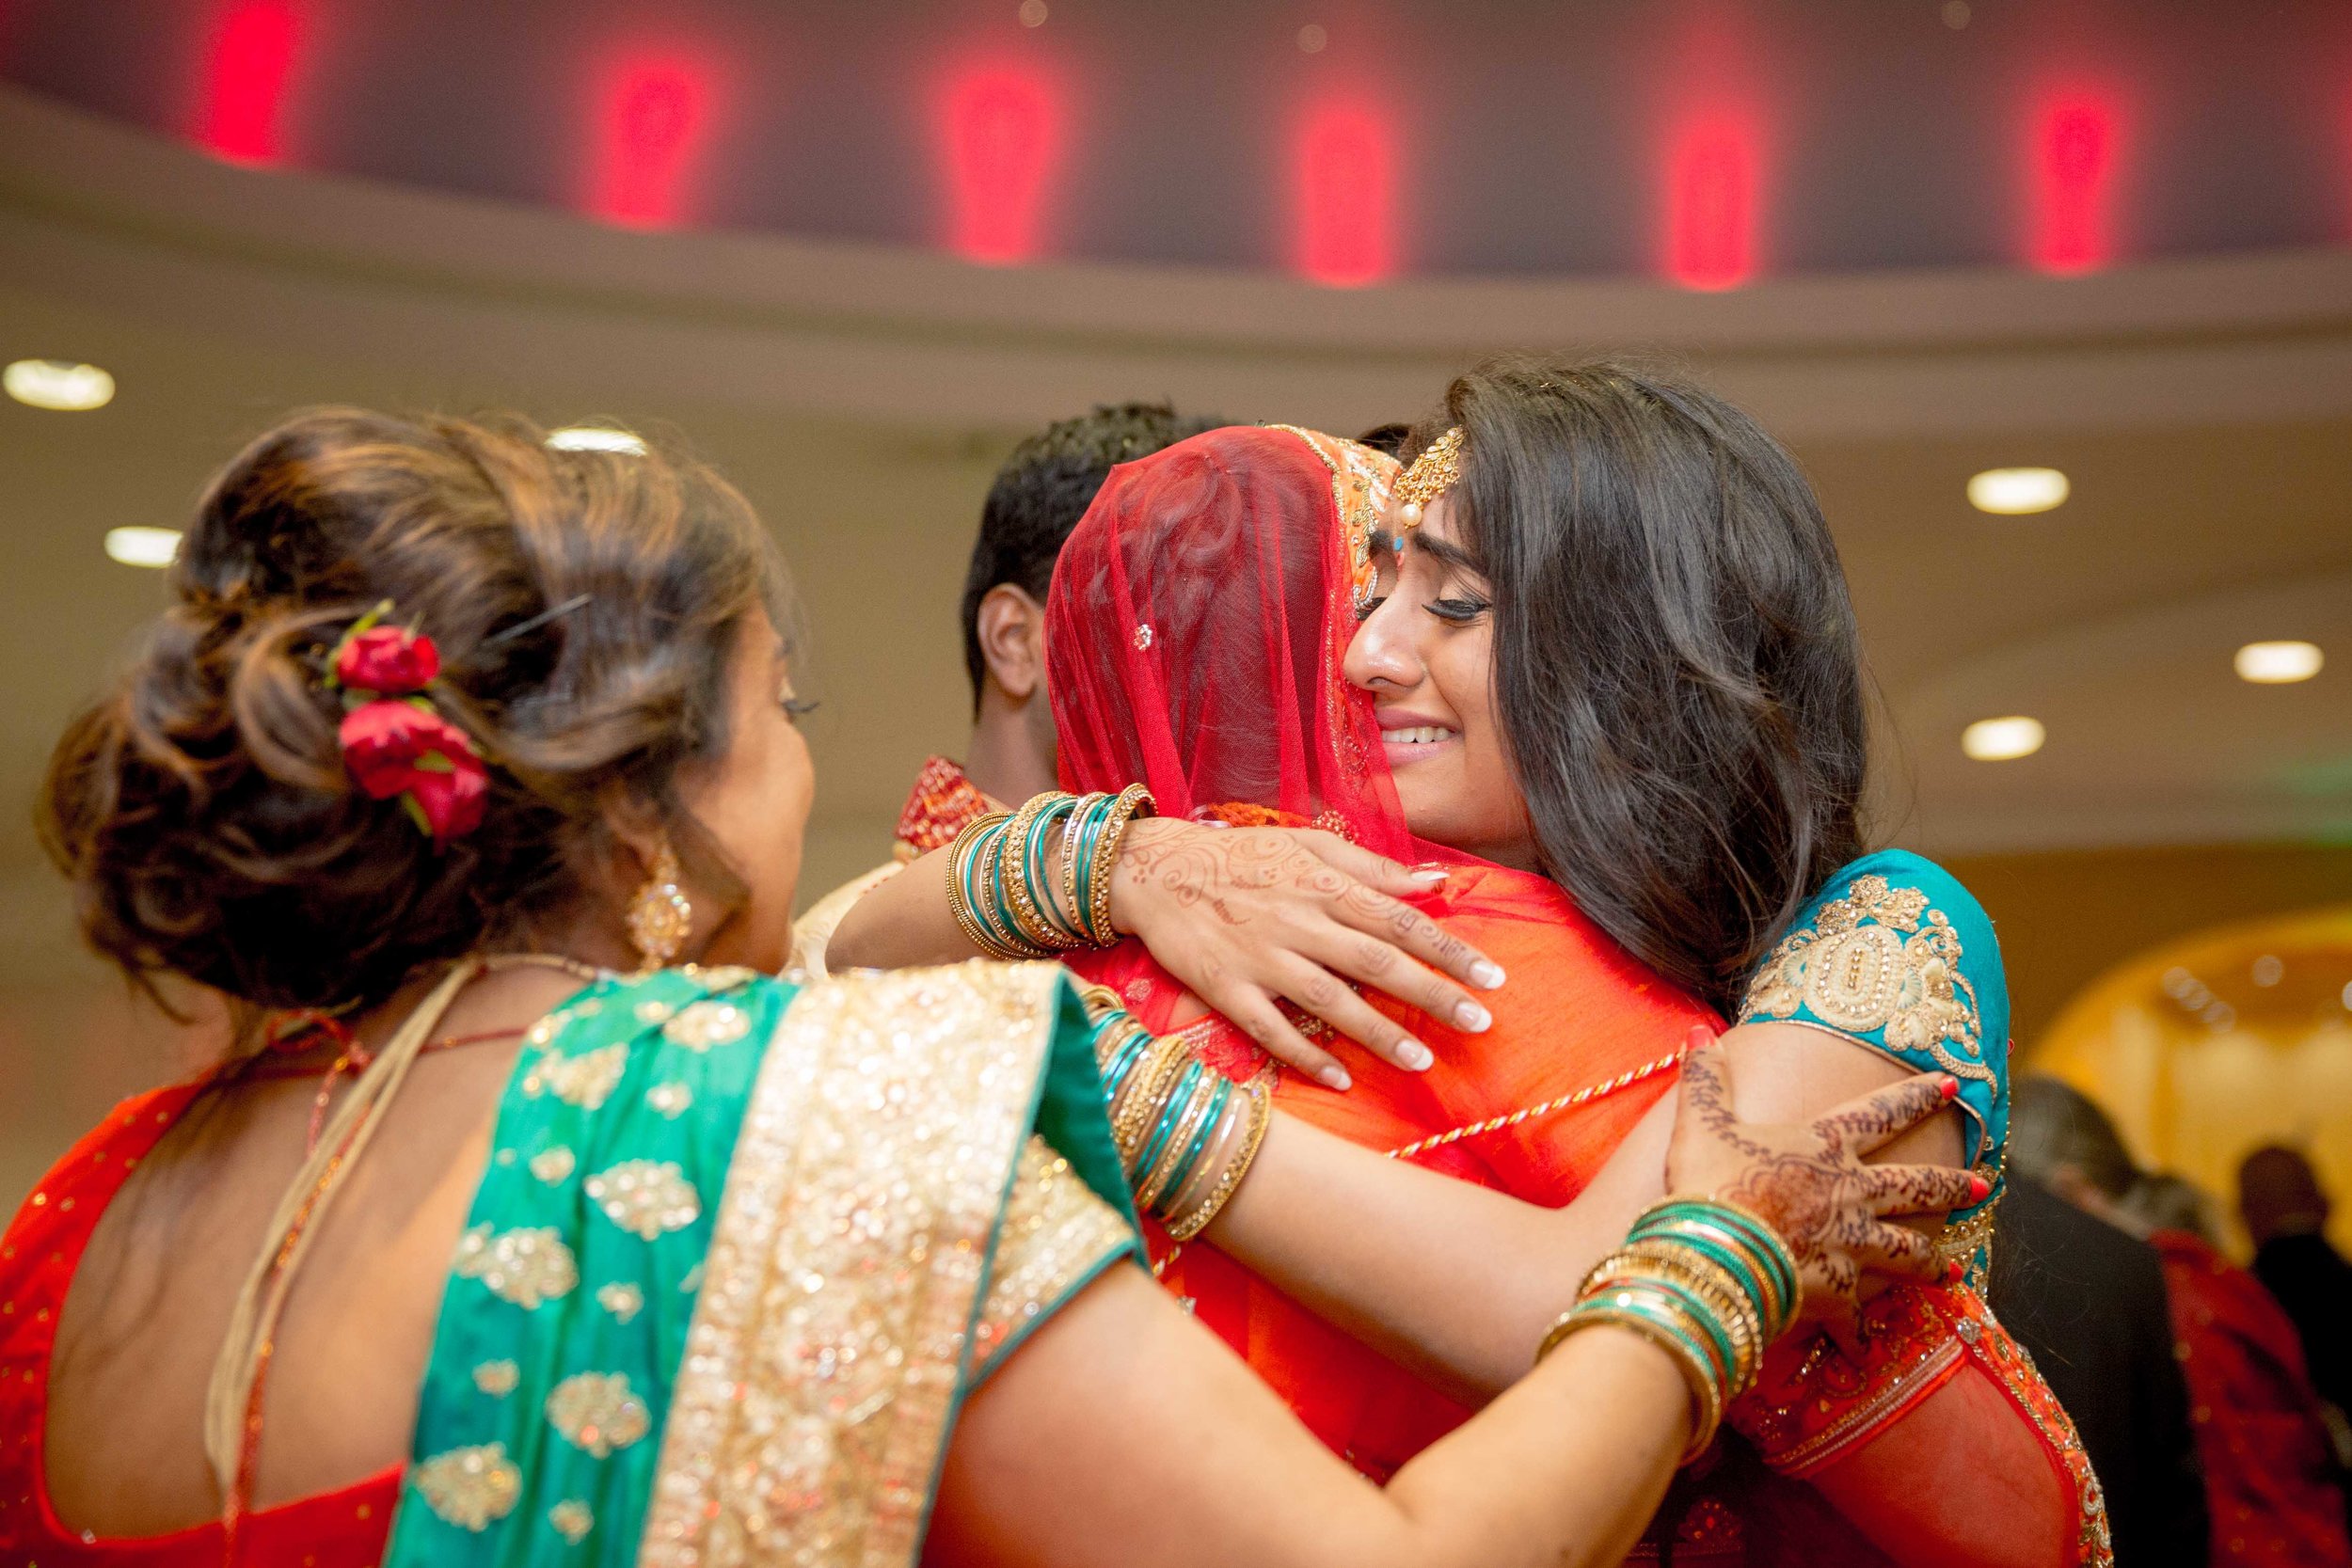 premier-banquetting-london-Hindu-asian-wedding-photographer-natalia-smith-photography-45.jpg